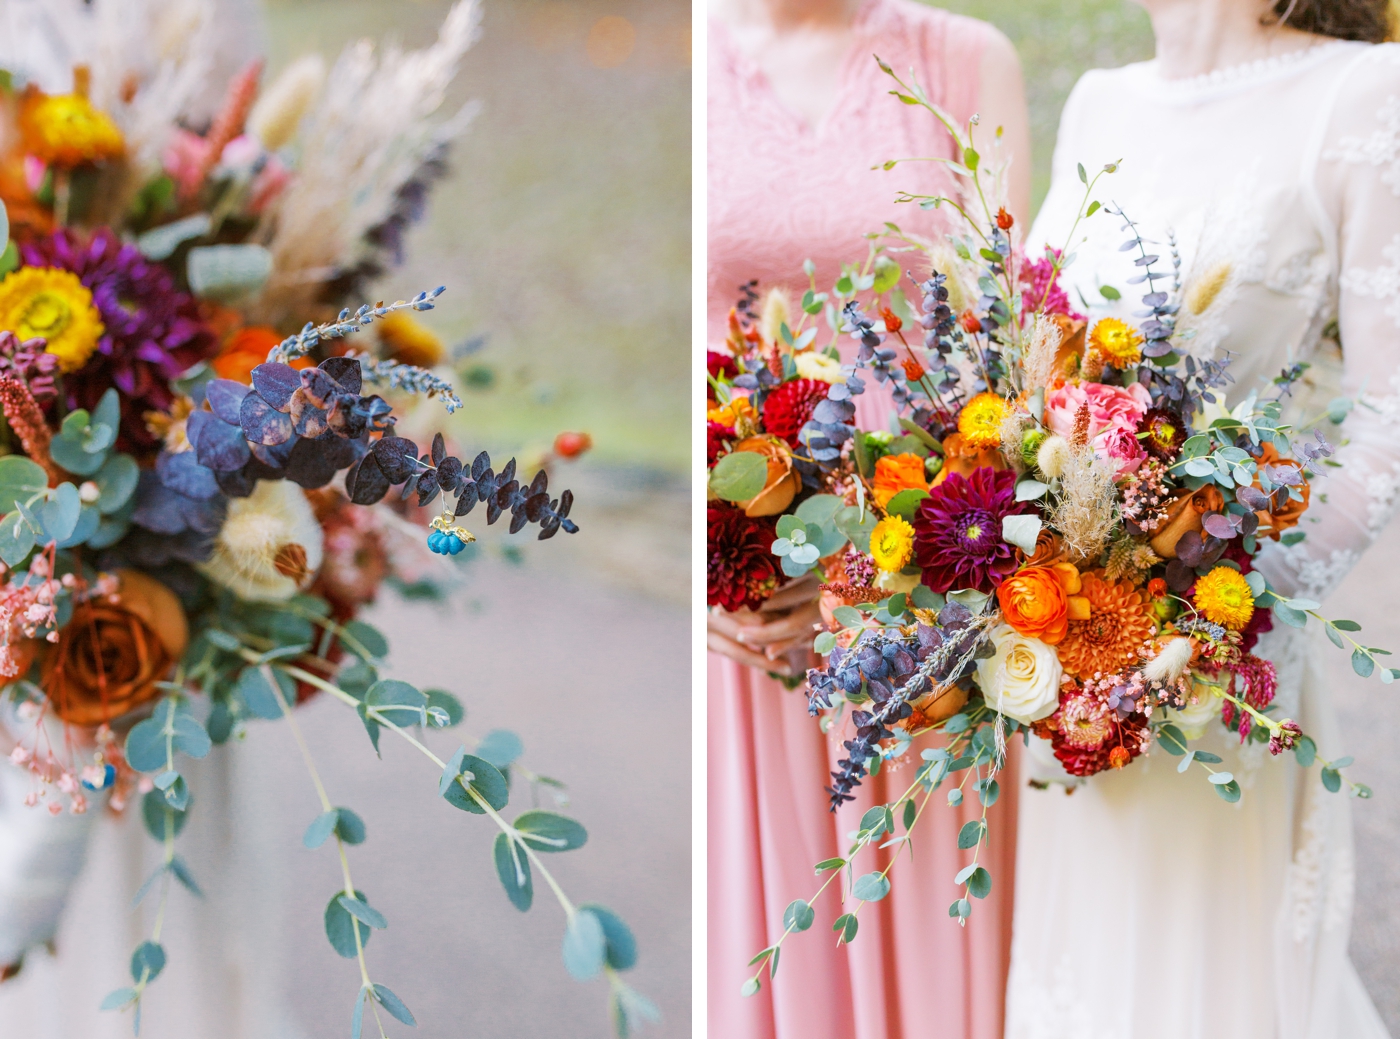 Bridal bouquet with burden dahlias, dried lavender, eucalyptus, and fall flowers